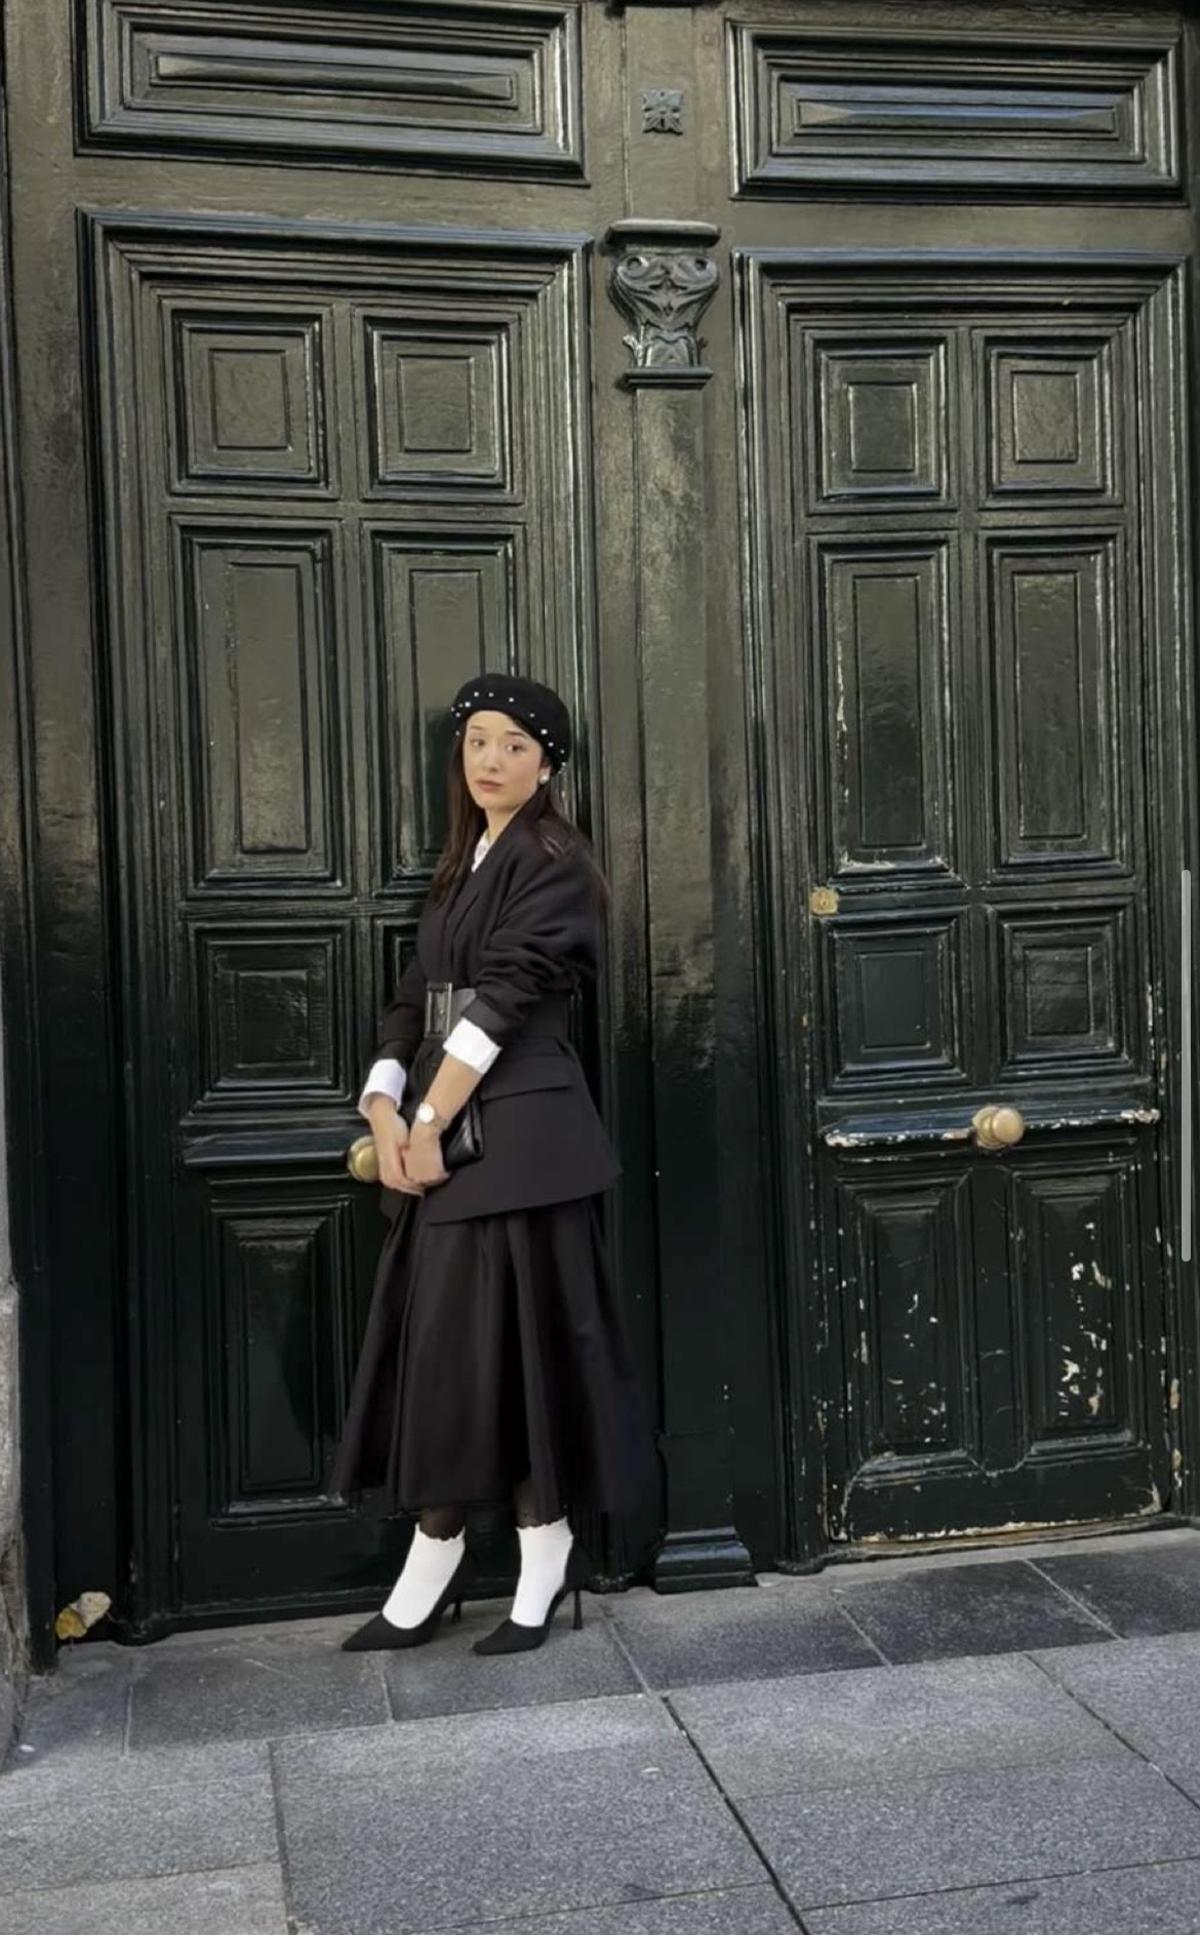 Maria Chtatou als carrers Madrid.